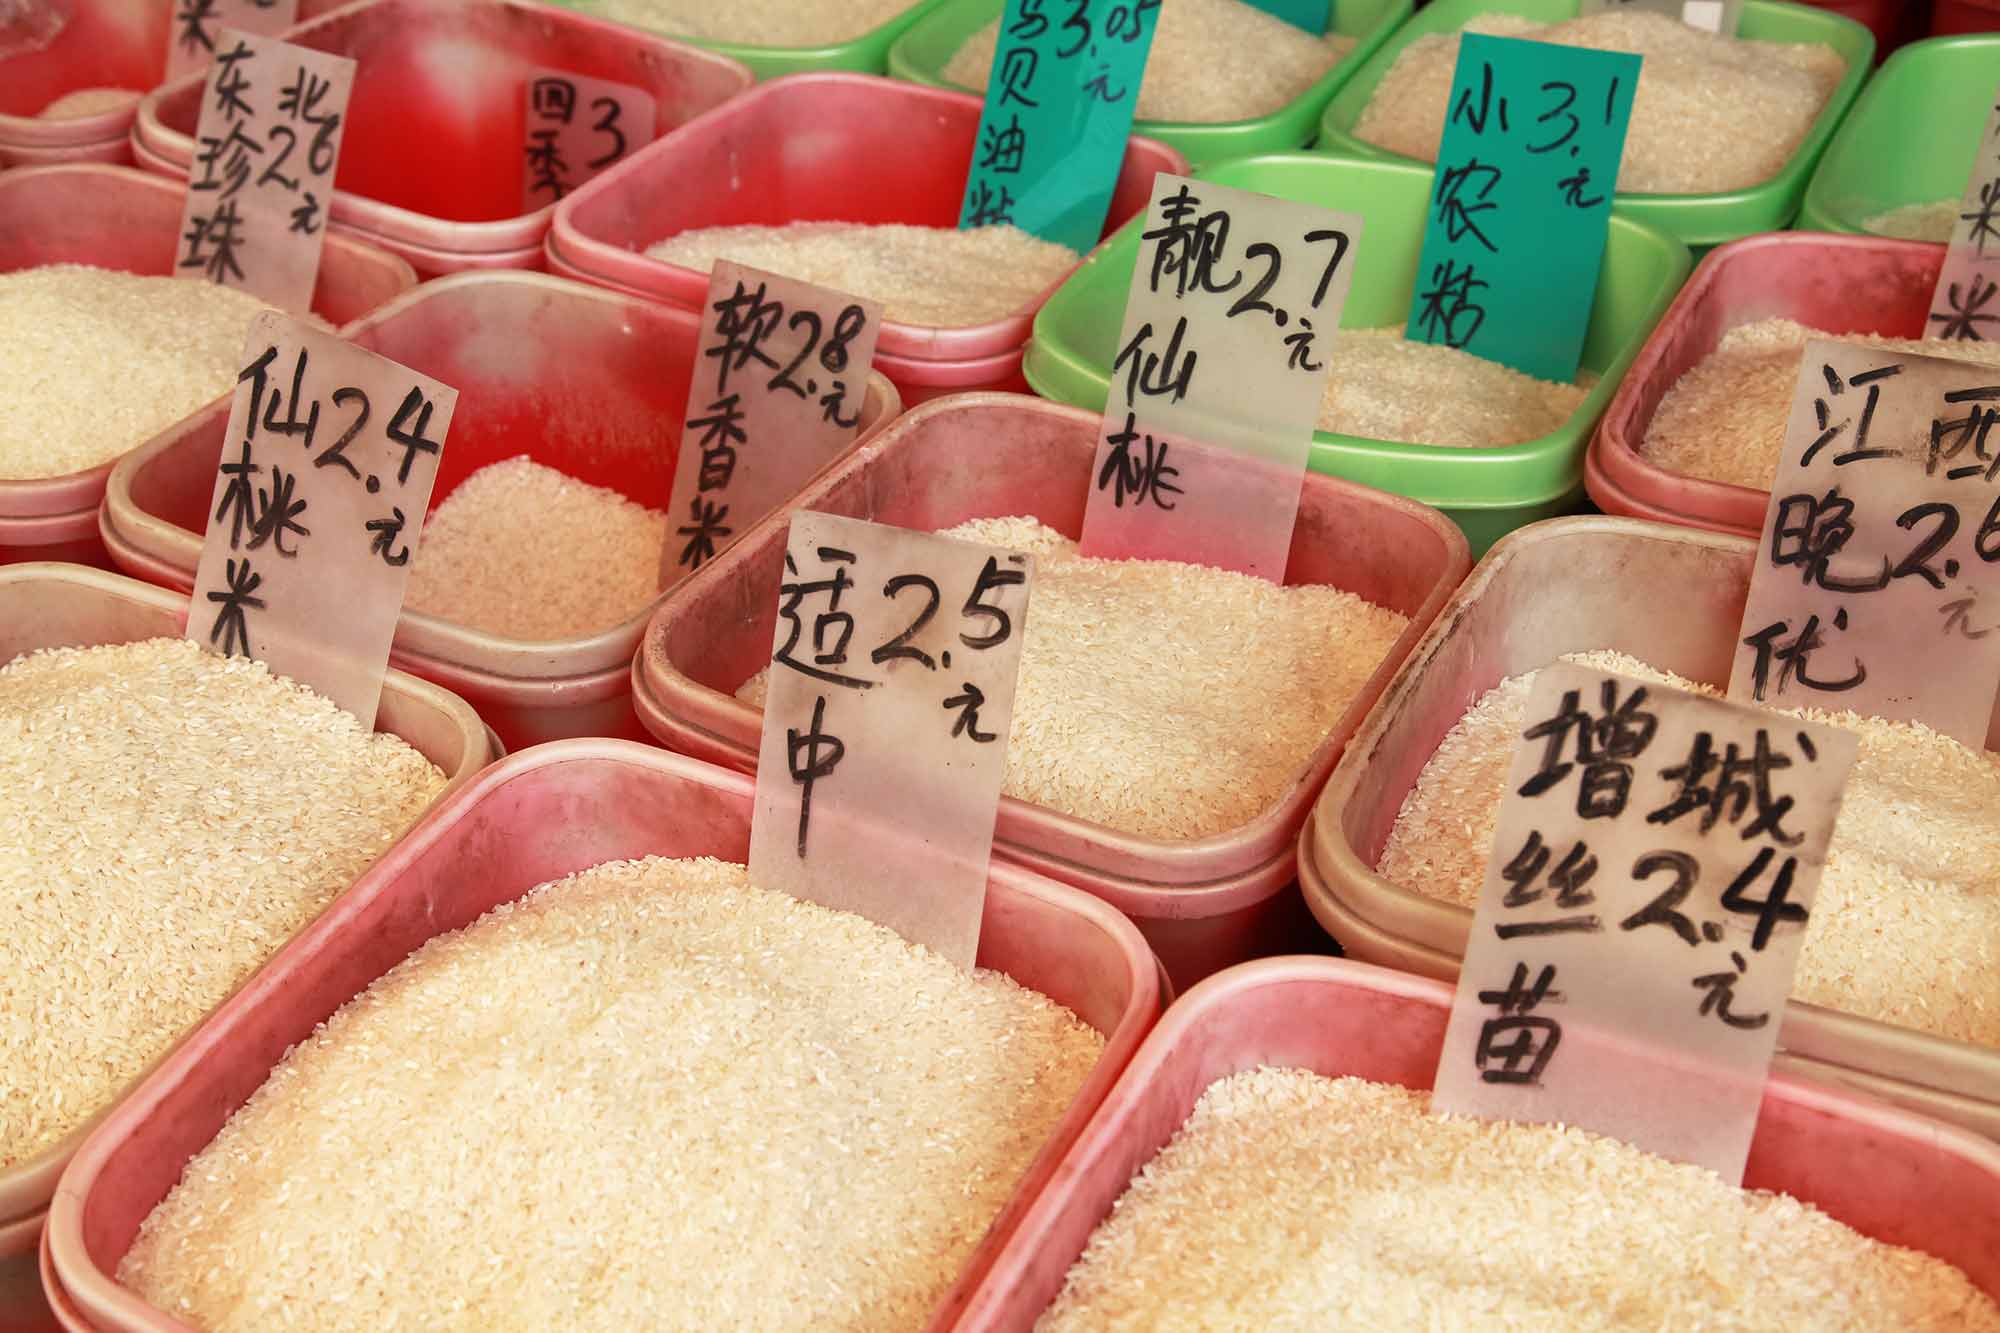 Rice varieties in Guangzhou, China. © Ulli Maier & Nisa Maier